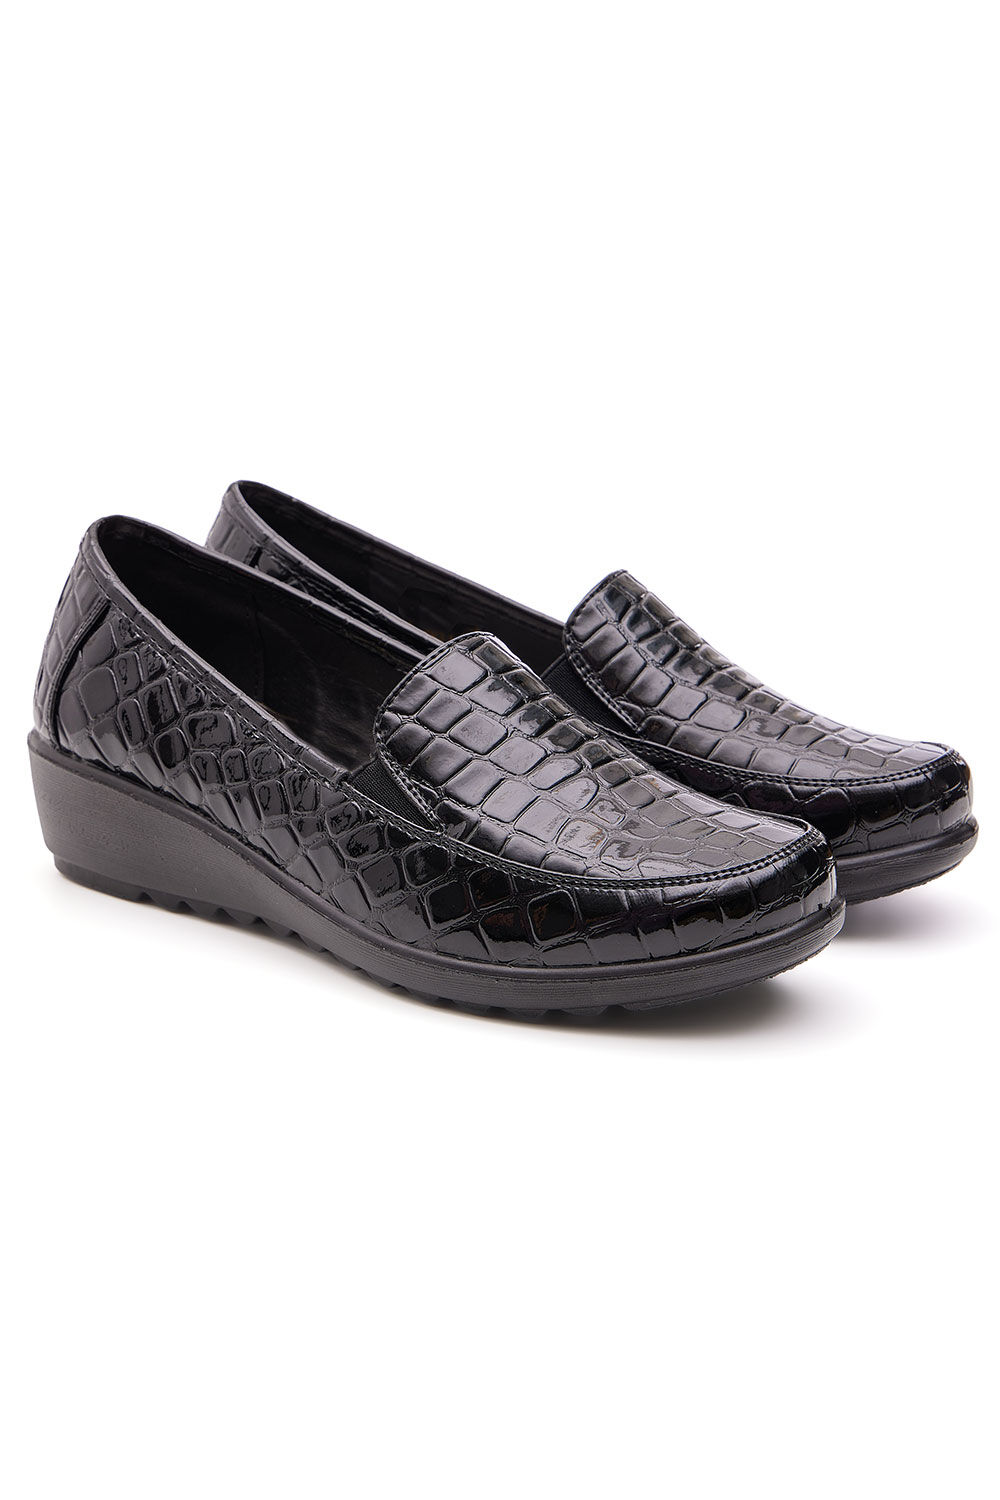 Cushion Walk Black - Faux Snake Patent Slip On Shoes, Size: 3